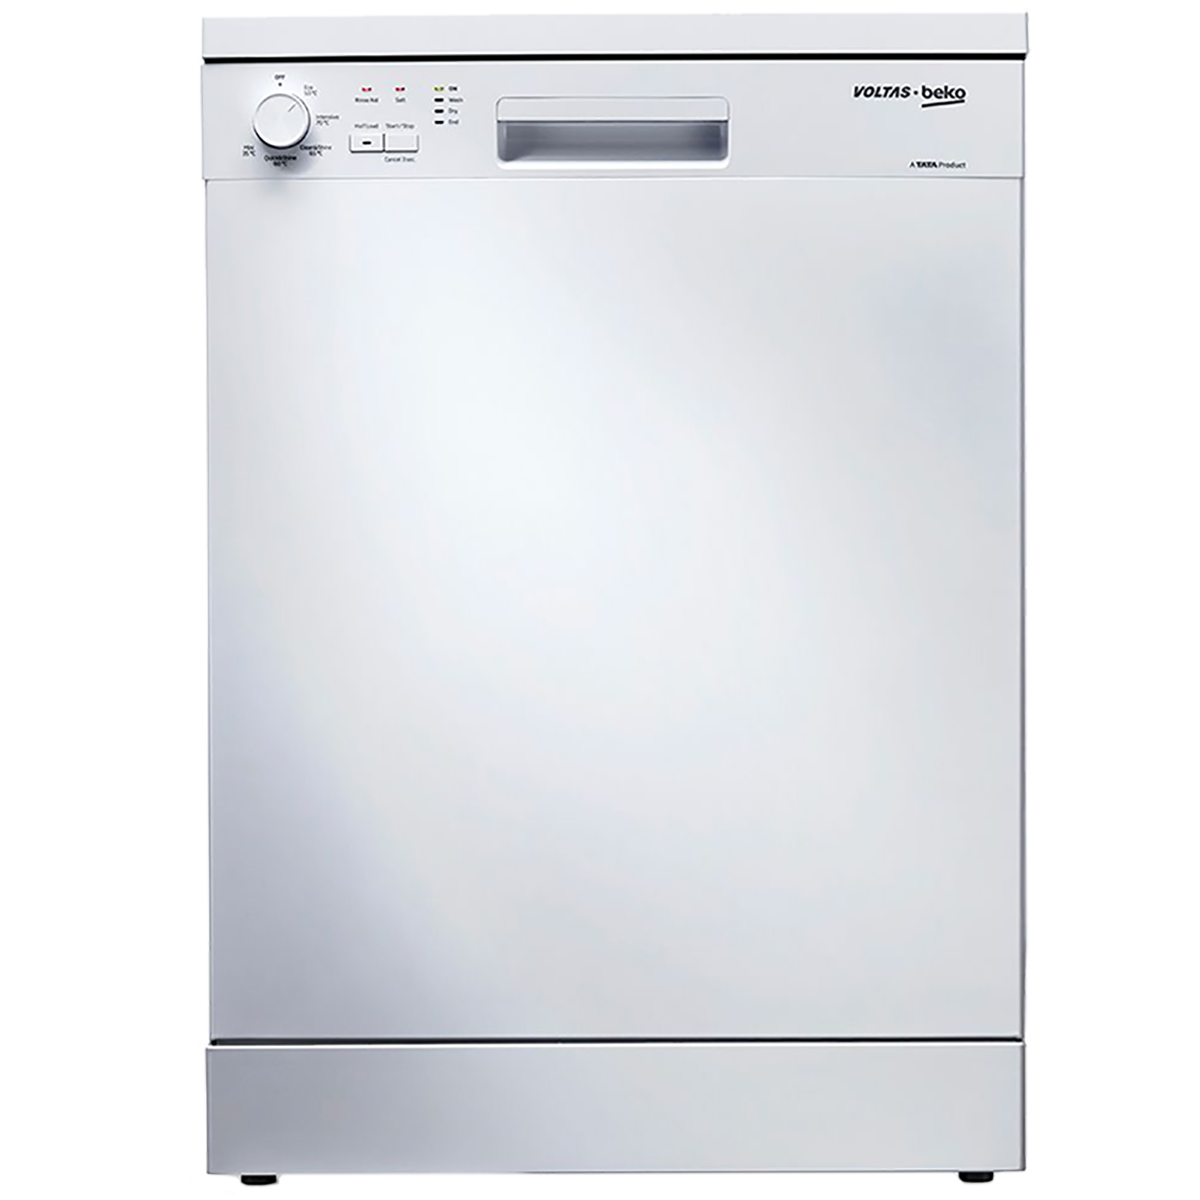 Voltas Beko 14 Place Setting Freestanding Dishwasher (Water Softening System, DF14W, White)